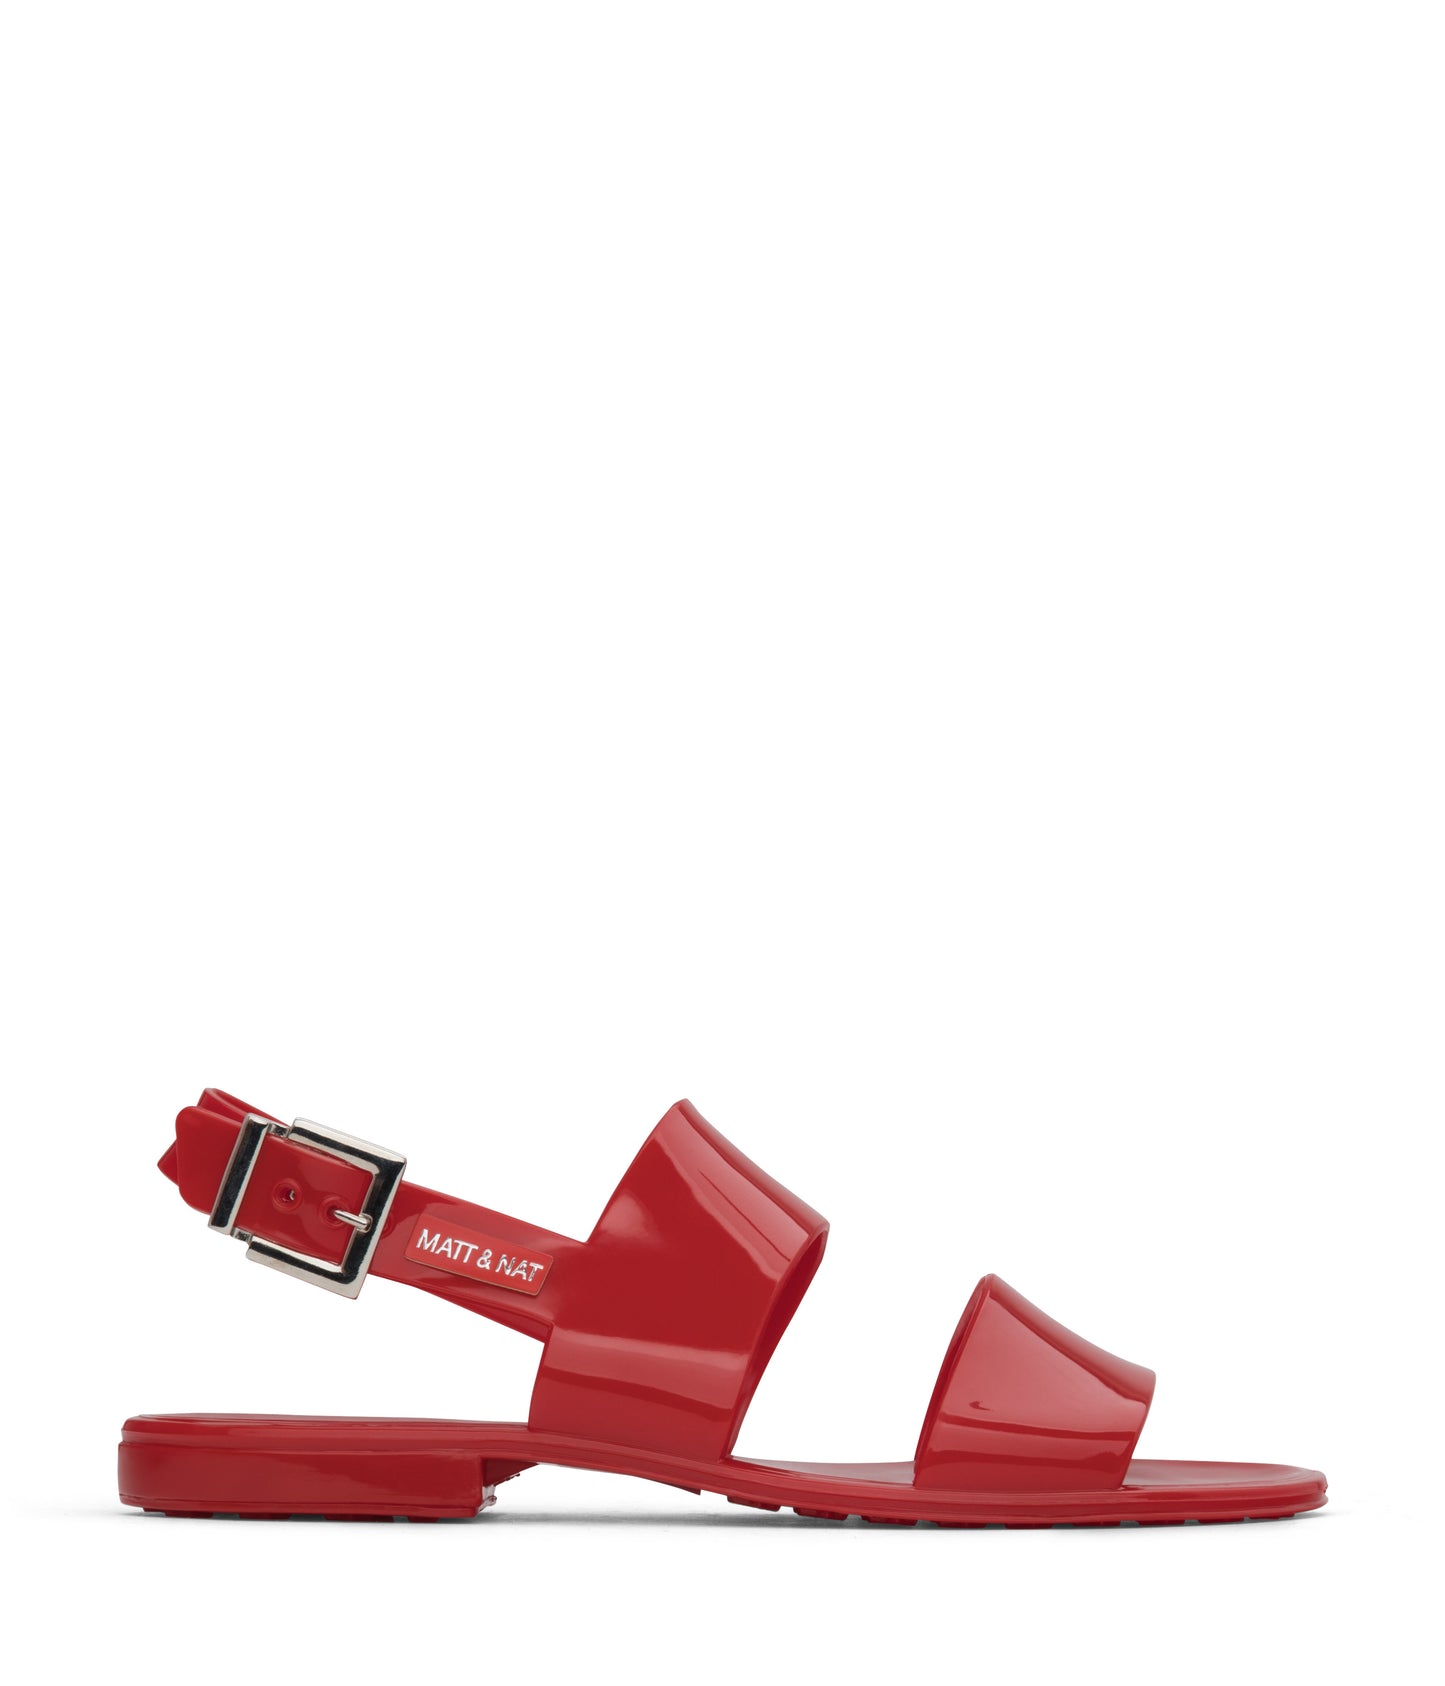 variant::rouge -- glam shoe rouge